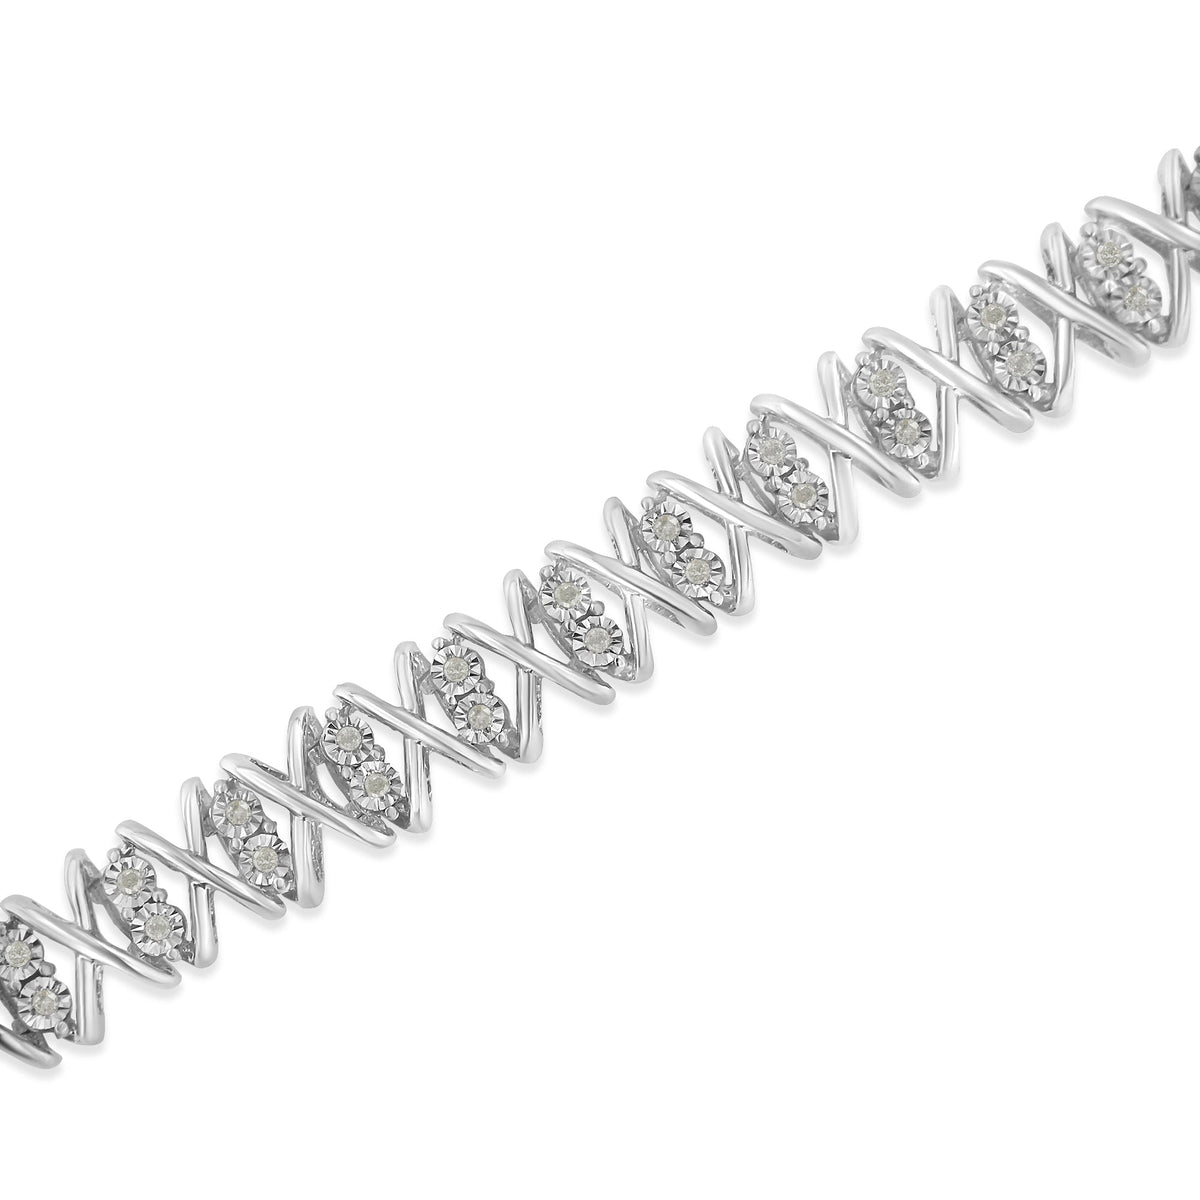 .925 Sterling Silver 2.0 Cttw Rose Cut Diamond X Link Tennis Bracelet (I-J Color, I2-I3 Clarity) - 7”  - LinkagejewelrydesignLinkagejewelrydesign